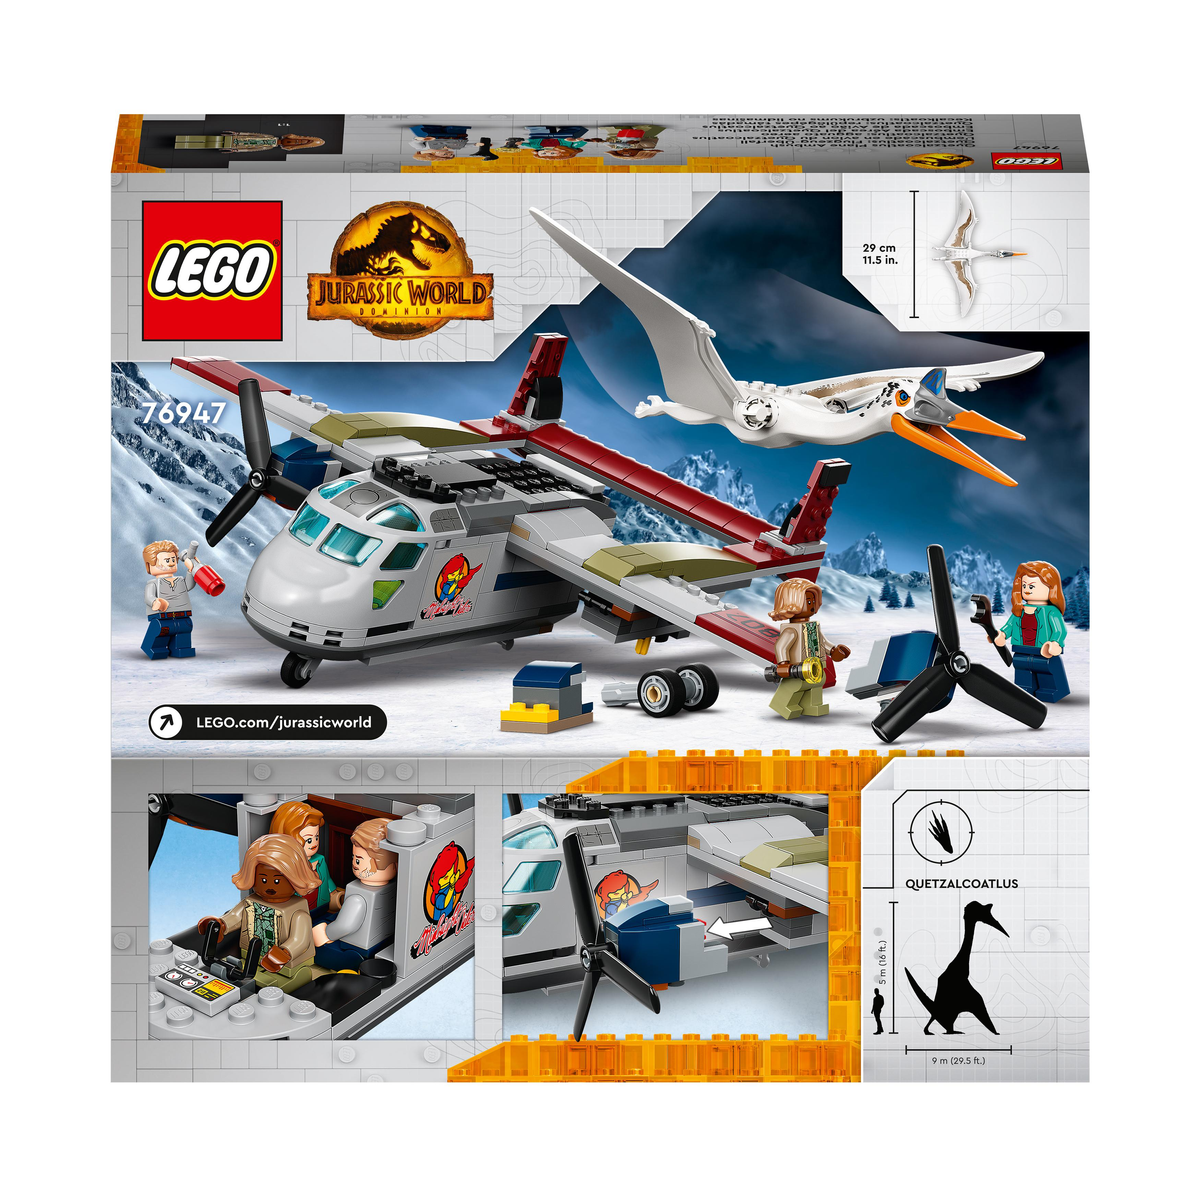 Bausatz QUETZALCOATLUS: FLUGZEUG-ÜBERFALL LEGO 76947